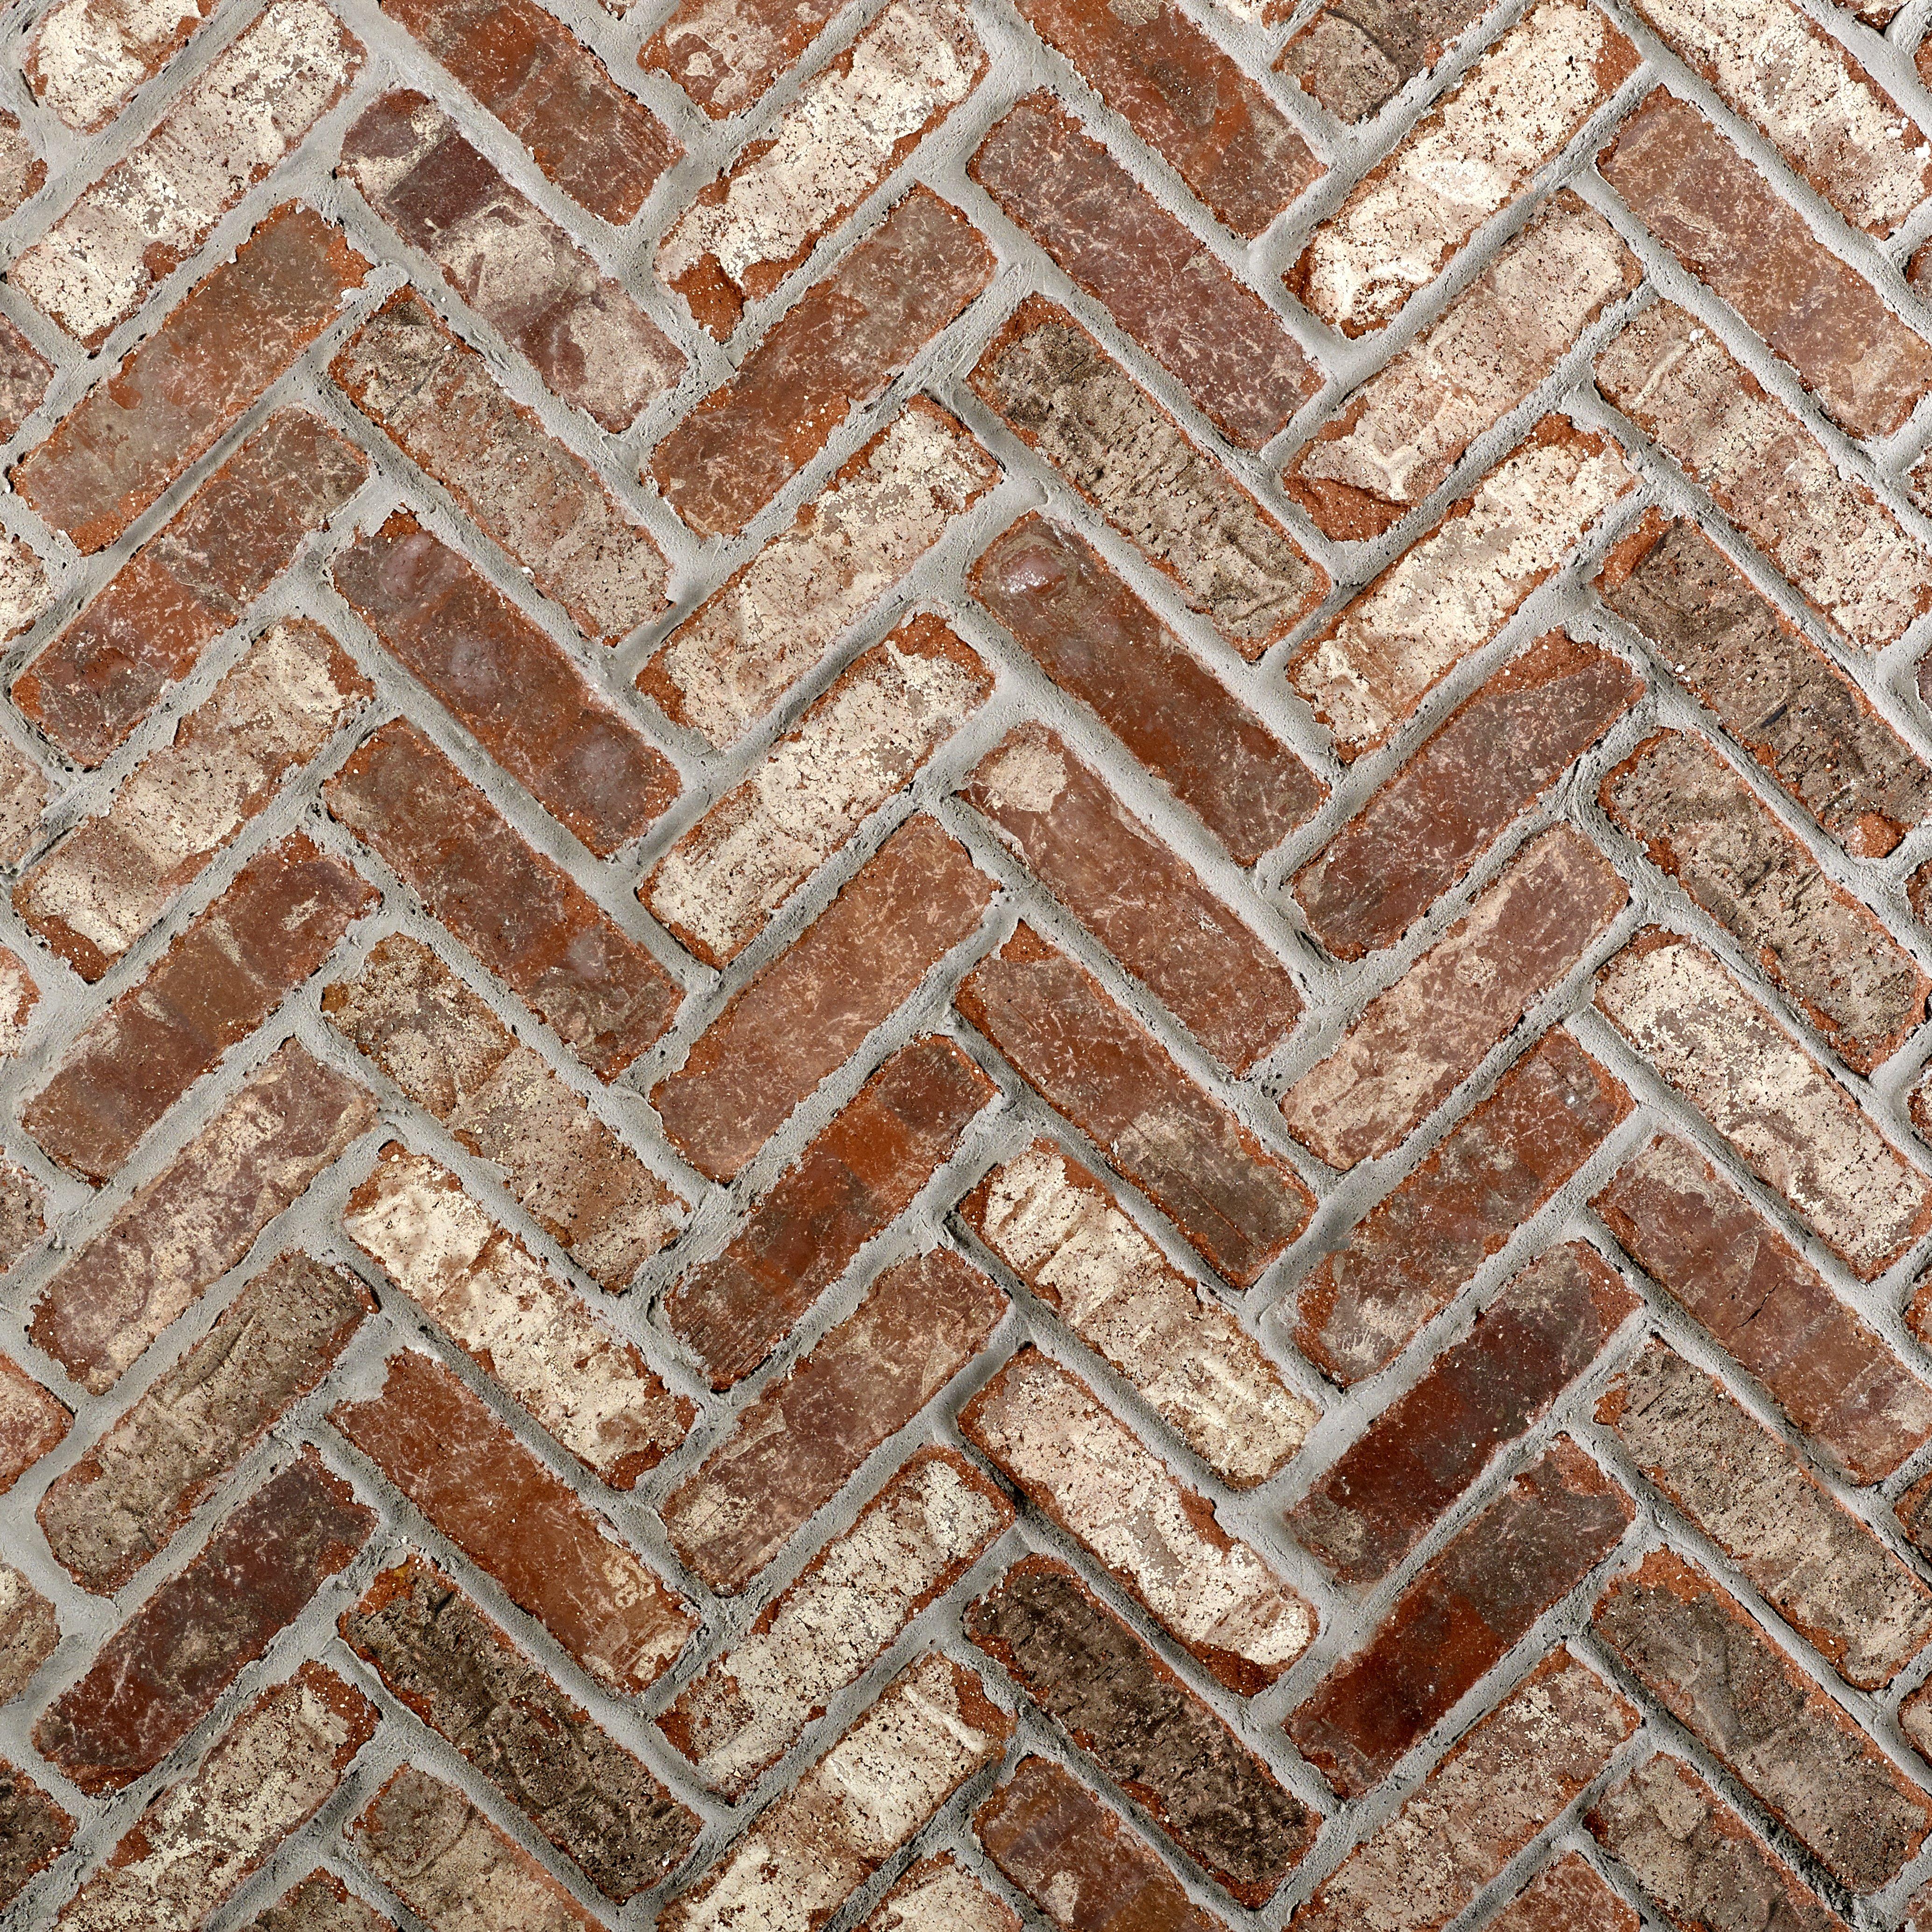 Castle Gate Thin Brick Herringbone, Black Brick Herringbone Floor Tile